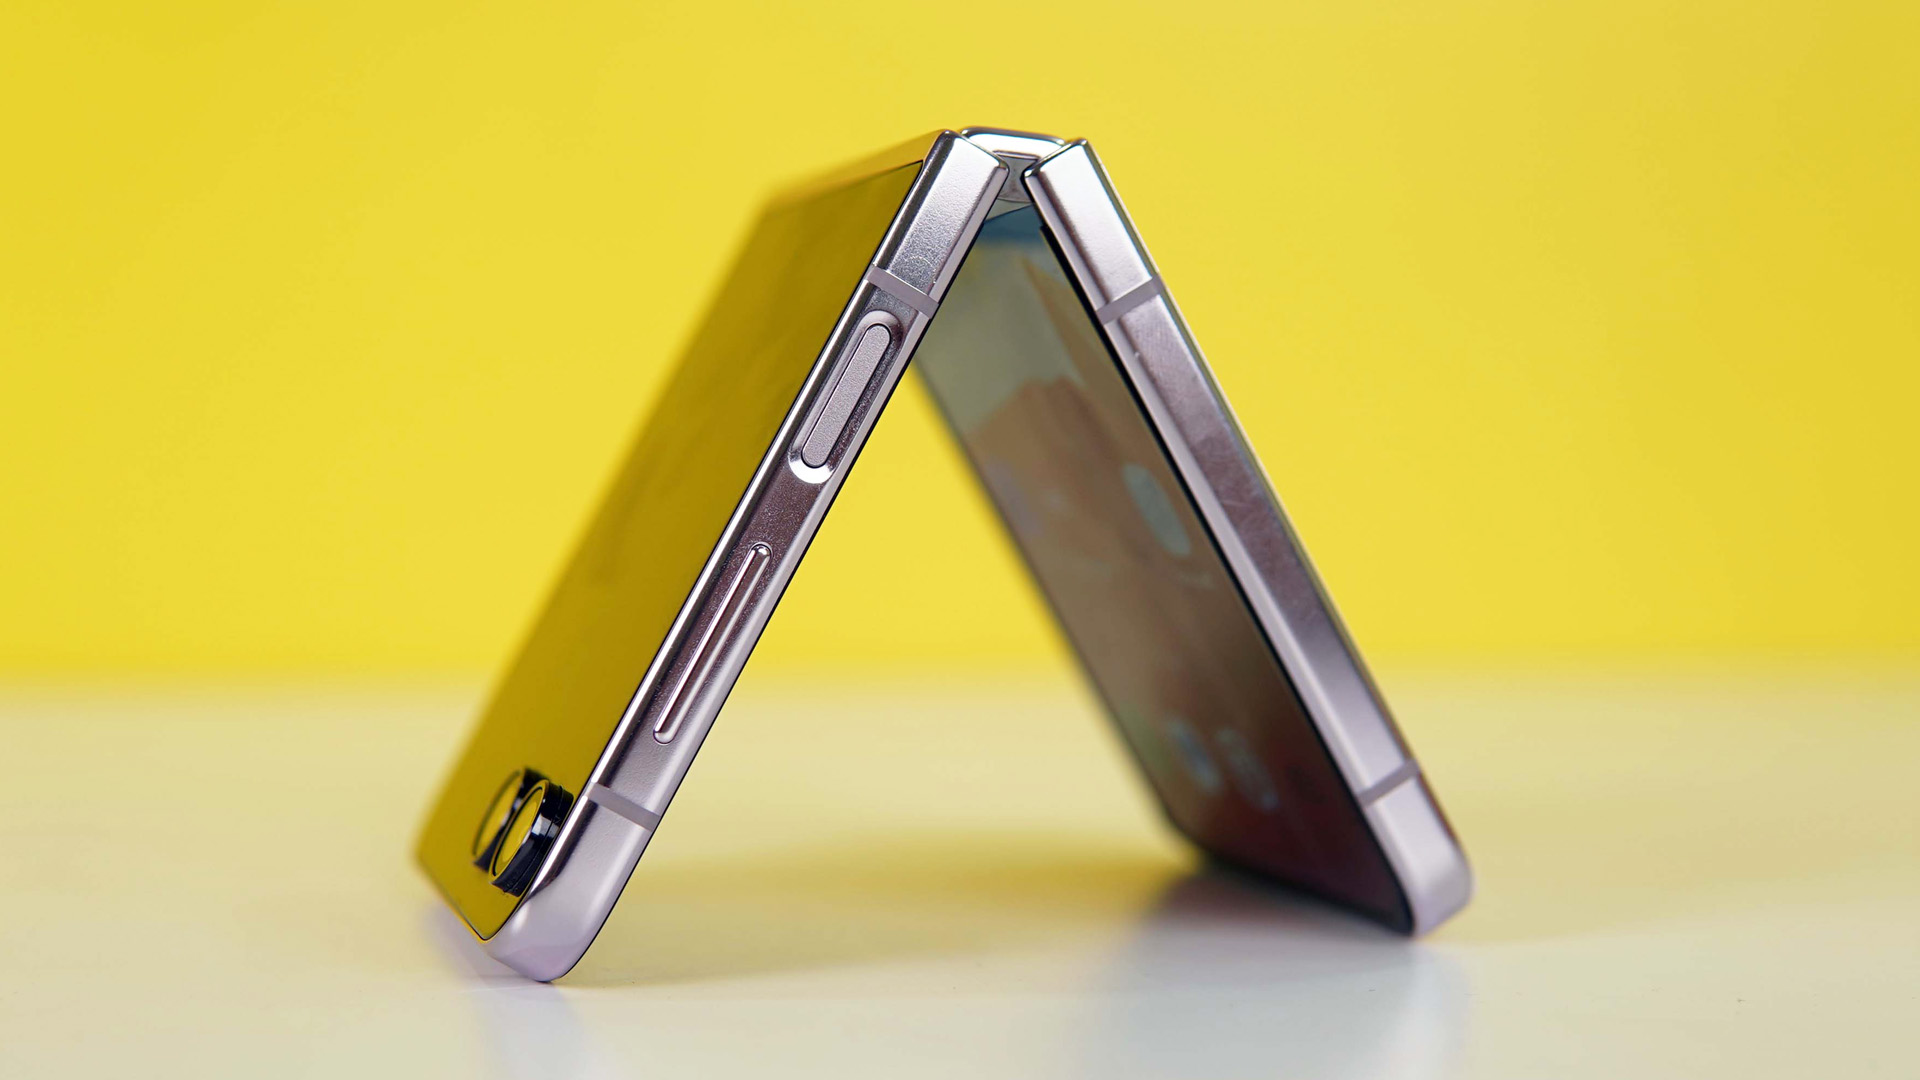 Samsung Z Flip 5 Review